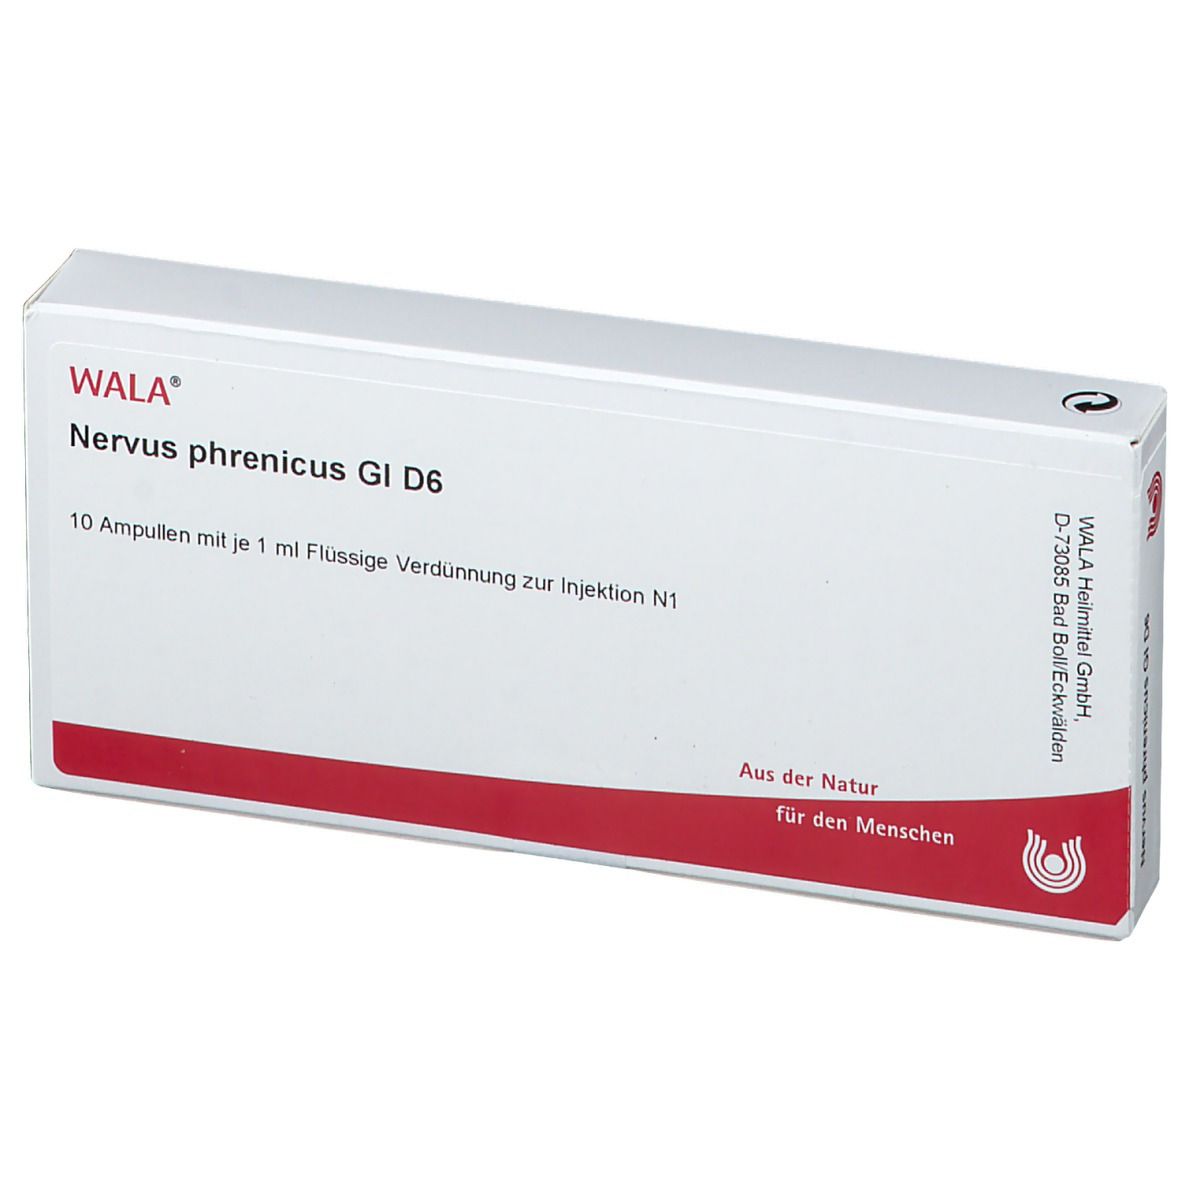 WALA® Nervus phrenicus Gl D 6